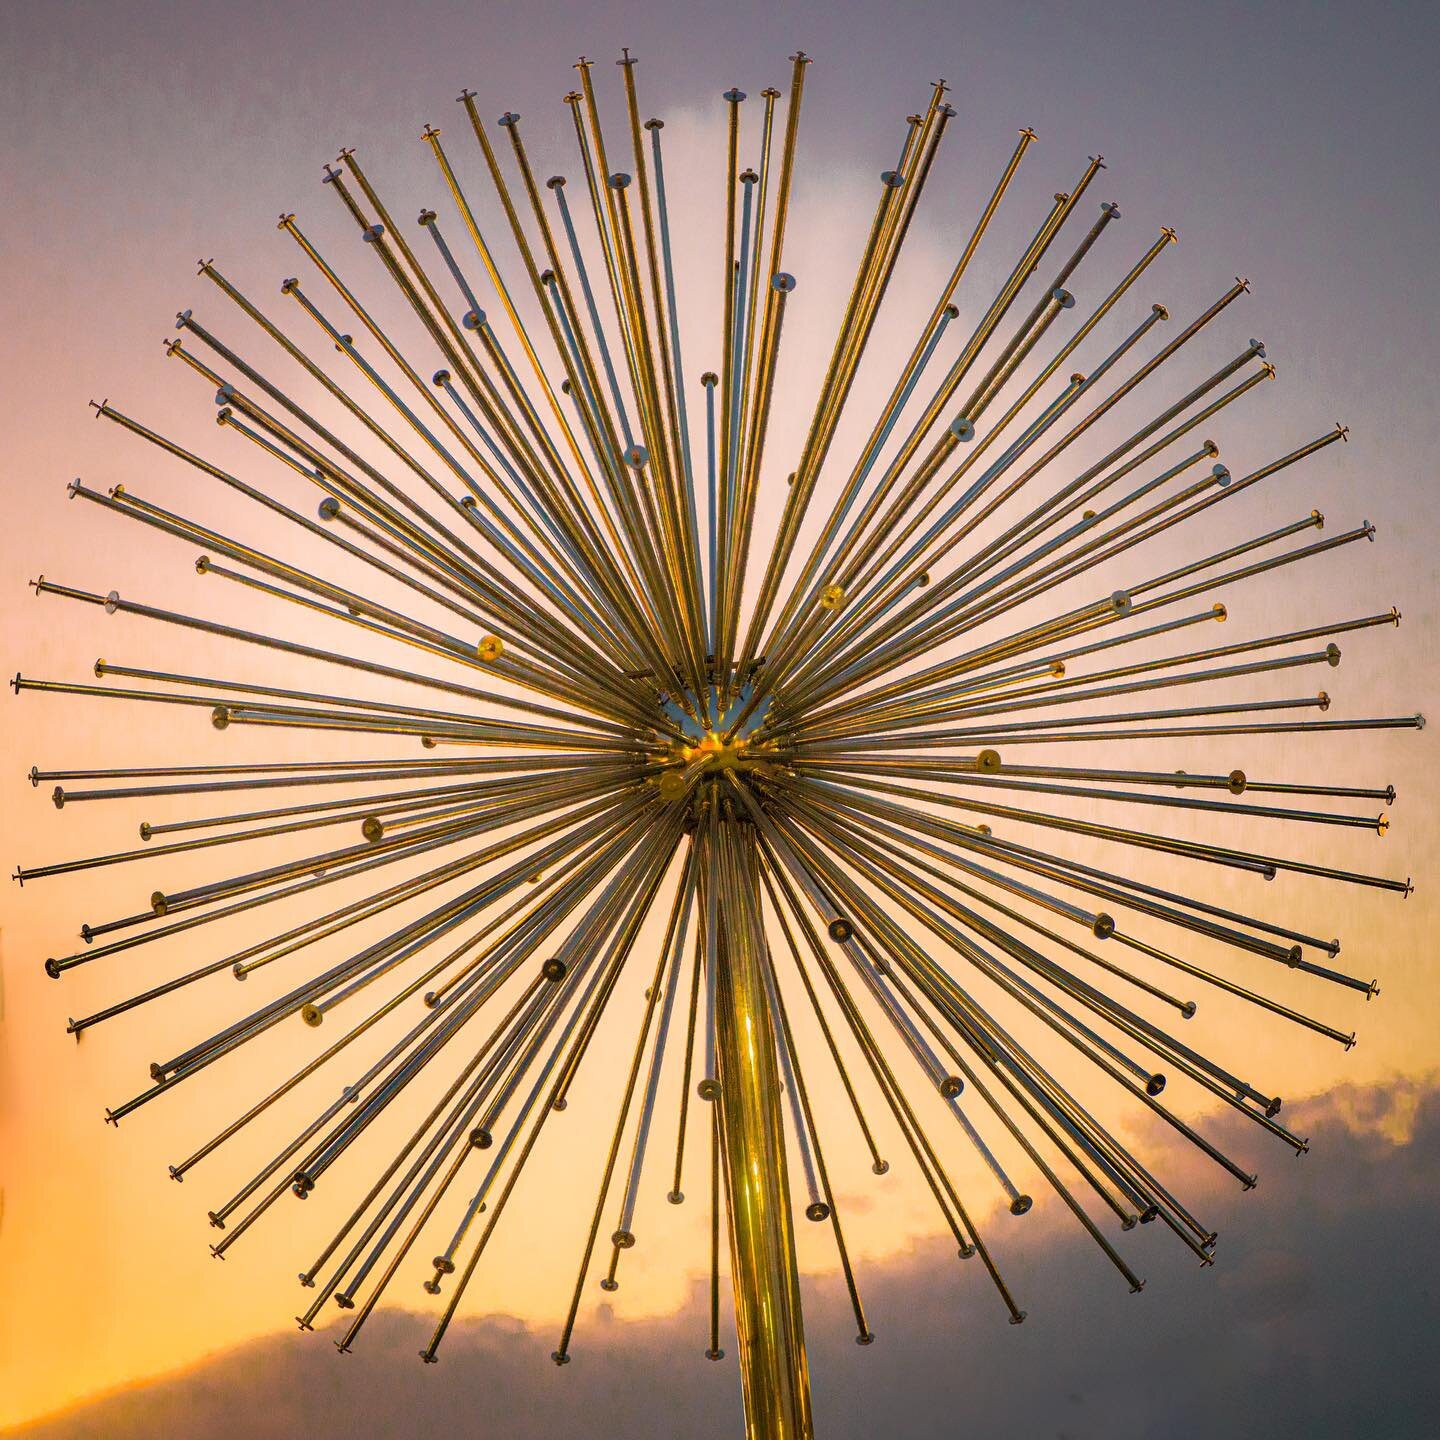 Make a Wish! ____________________________________
#makeawish #dandelionfountain #shopsatdonmills #agreatcapture #sundown #publicart #toronto #sculpture @cfshopsdonmills